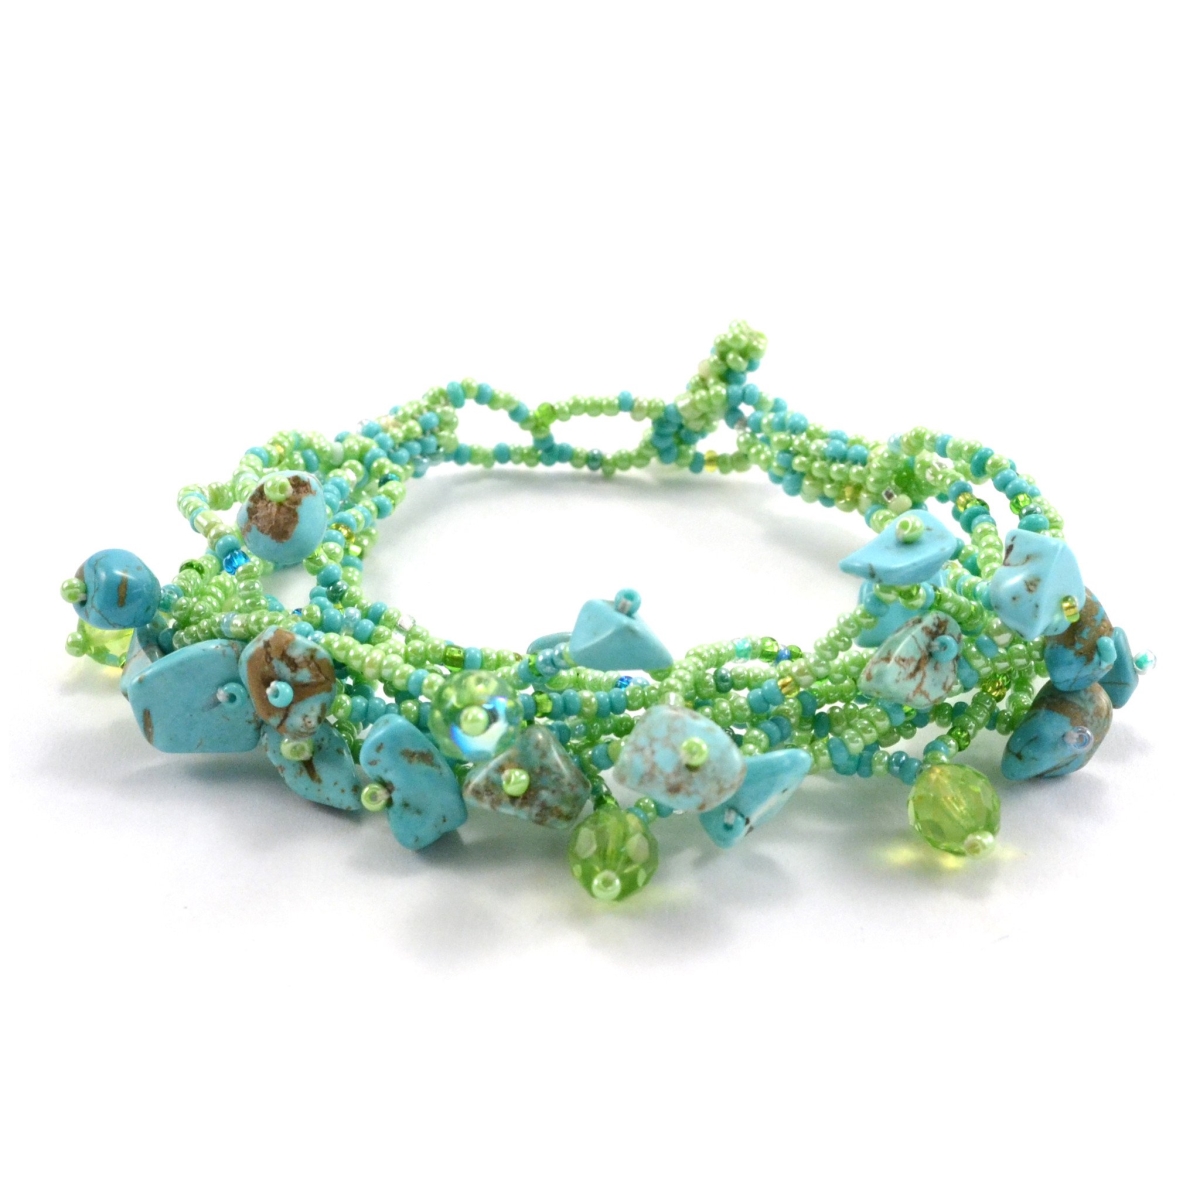 Lijbr-65-4-229102 Handmade & Fair Trade Chunky Stone Bracelet - Green